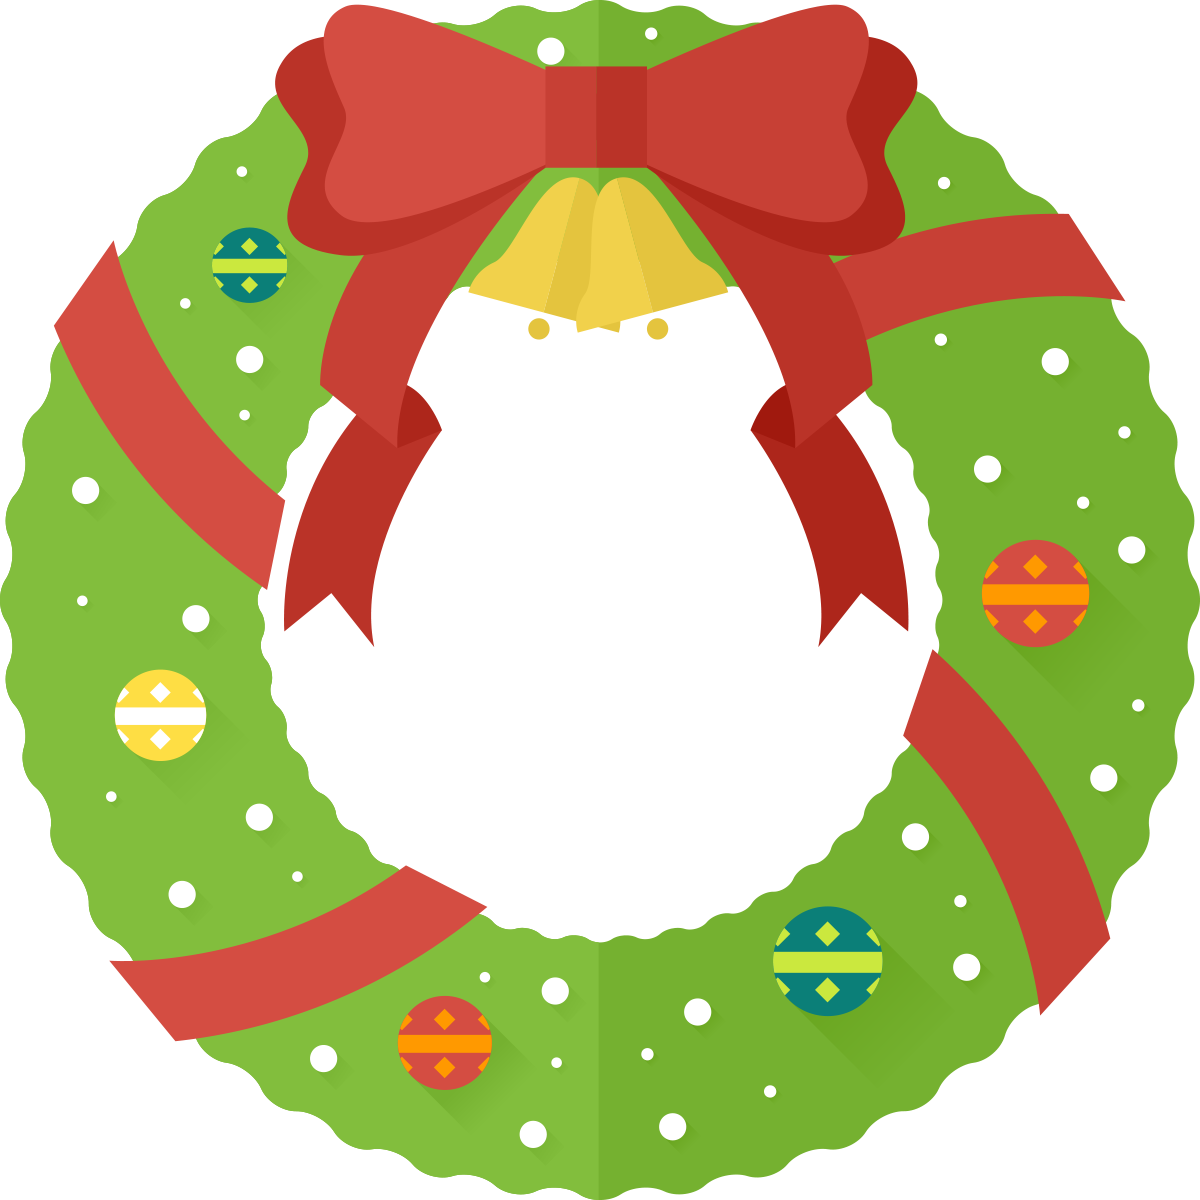 Free Christmas Wreath Clip Art